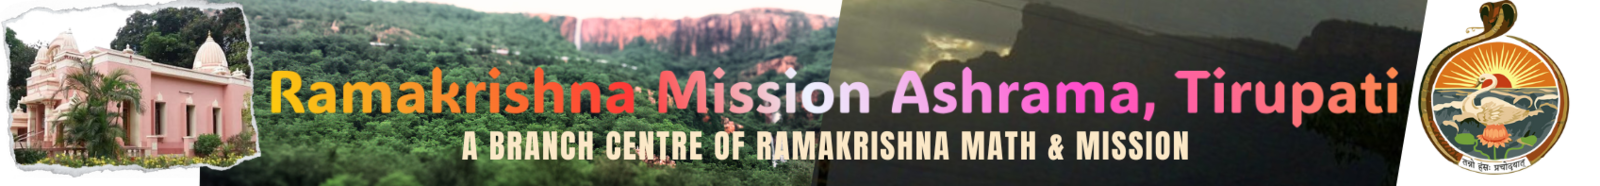 Ramakrishna Mission Ashrama Tirupati